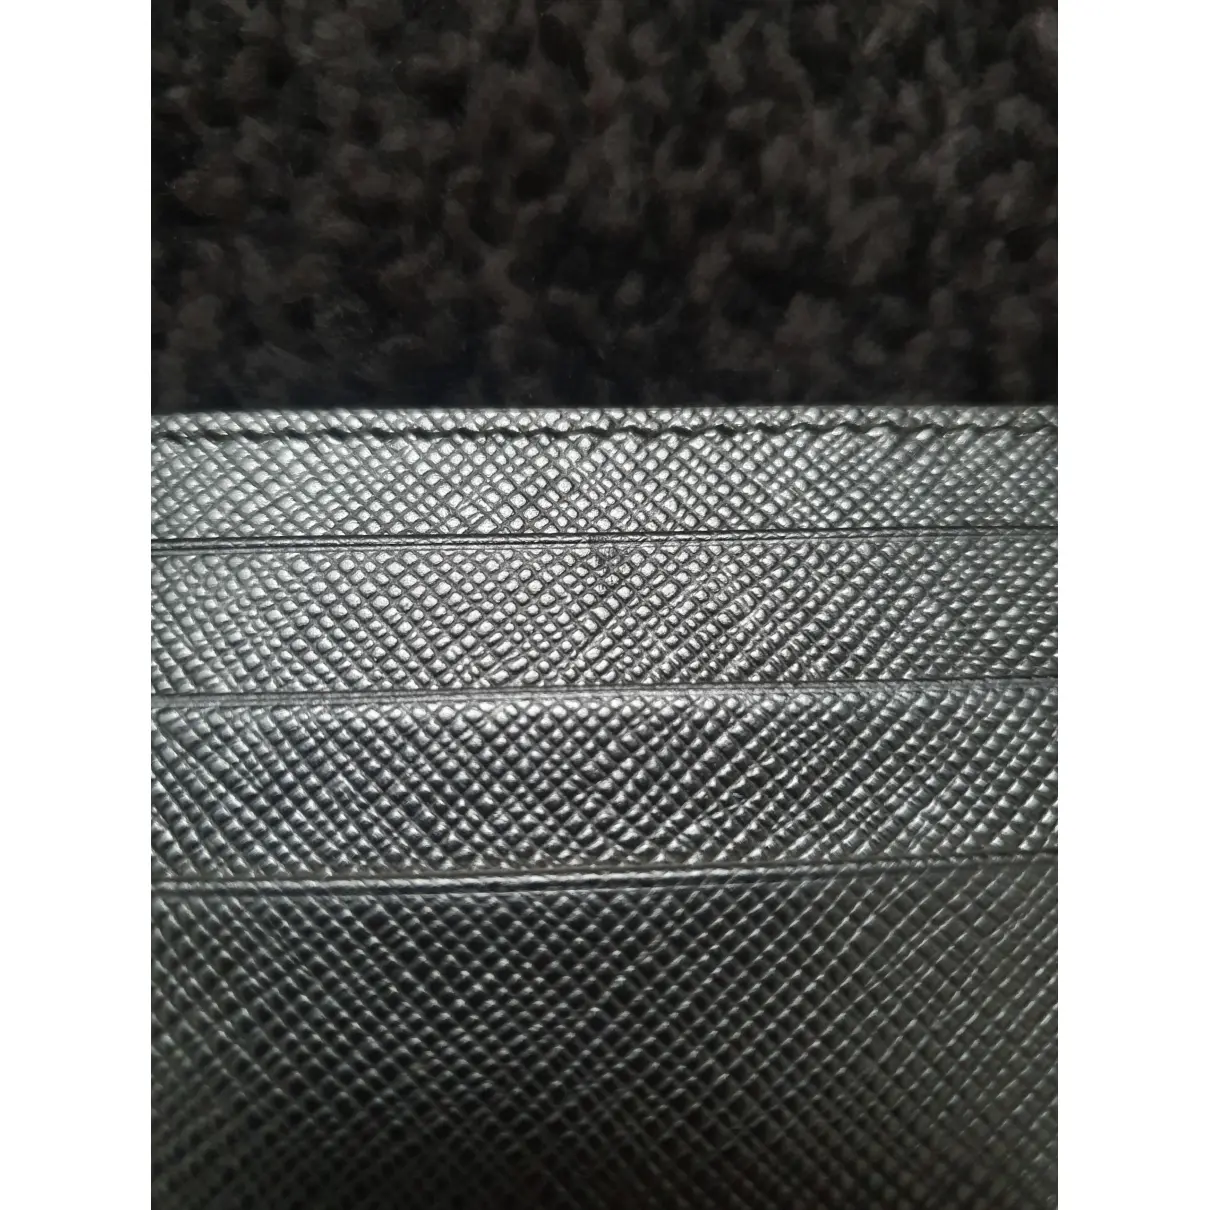 Patent leather purse Prada